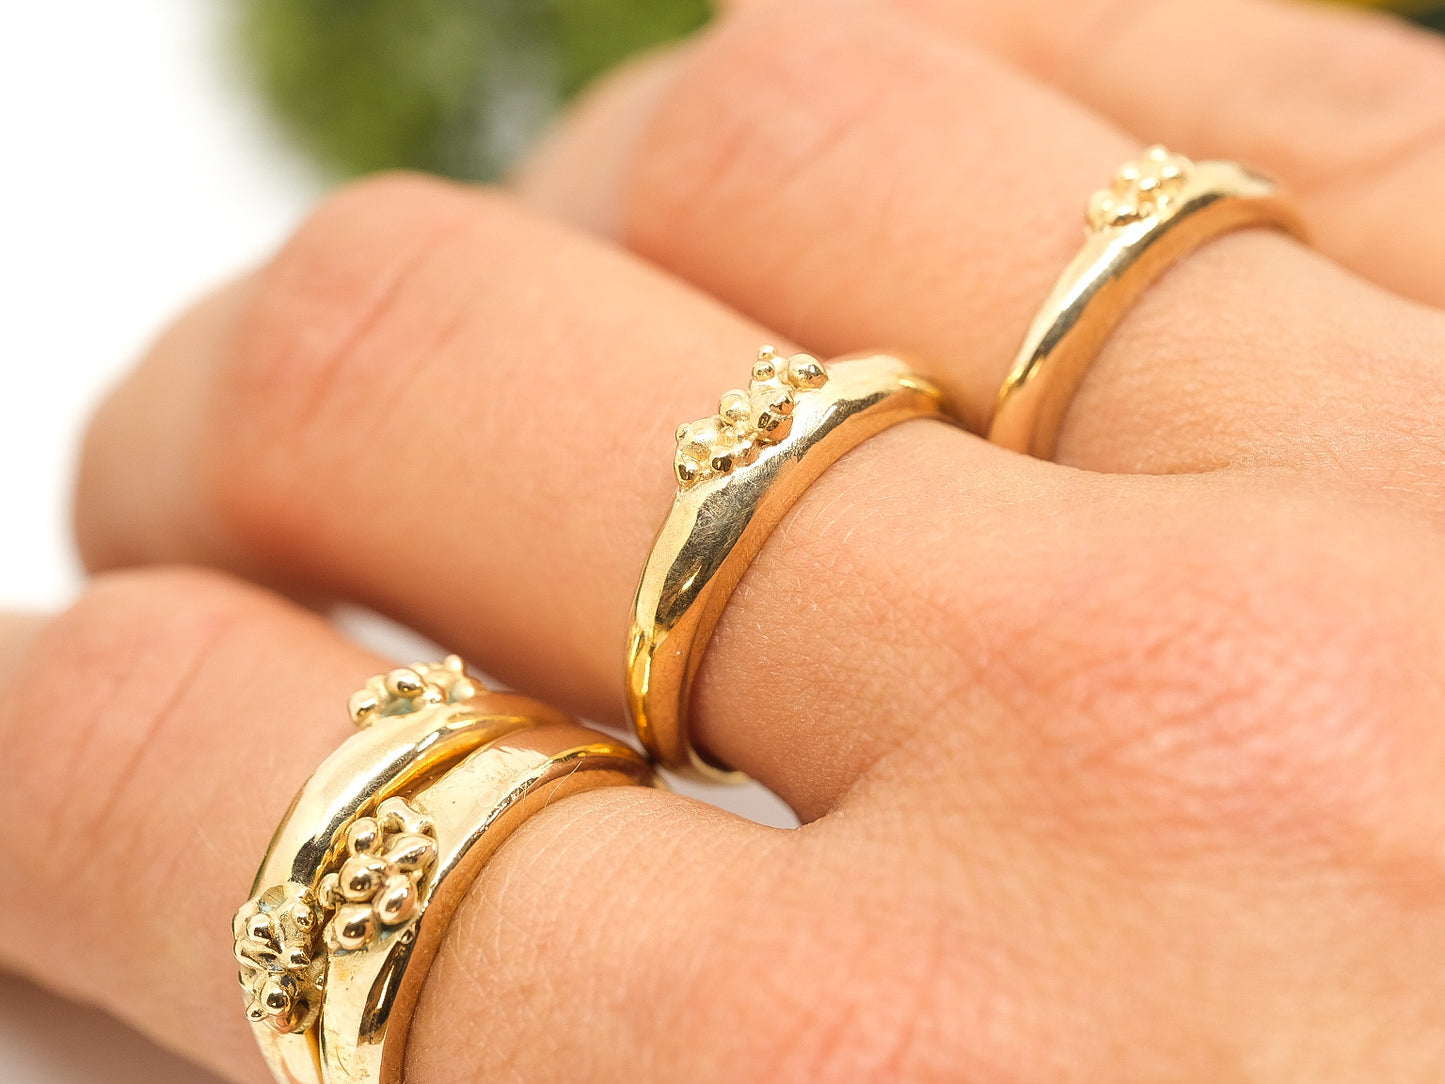 Bronze caviar rings